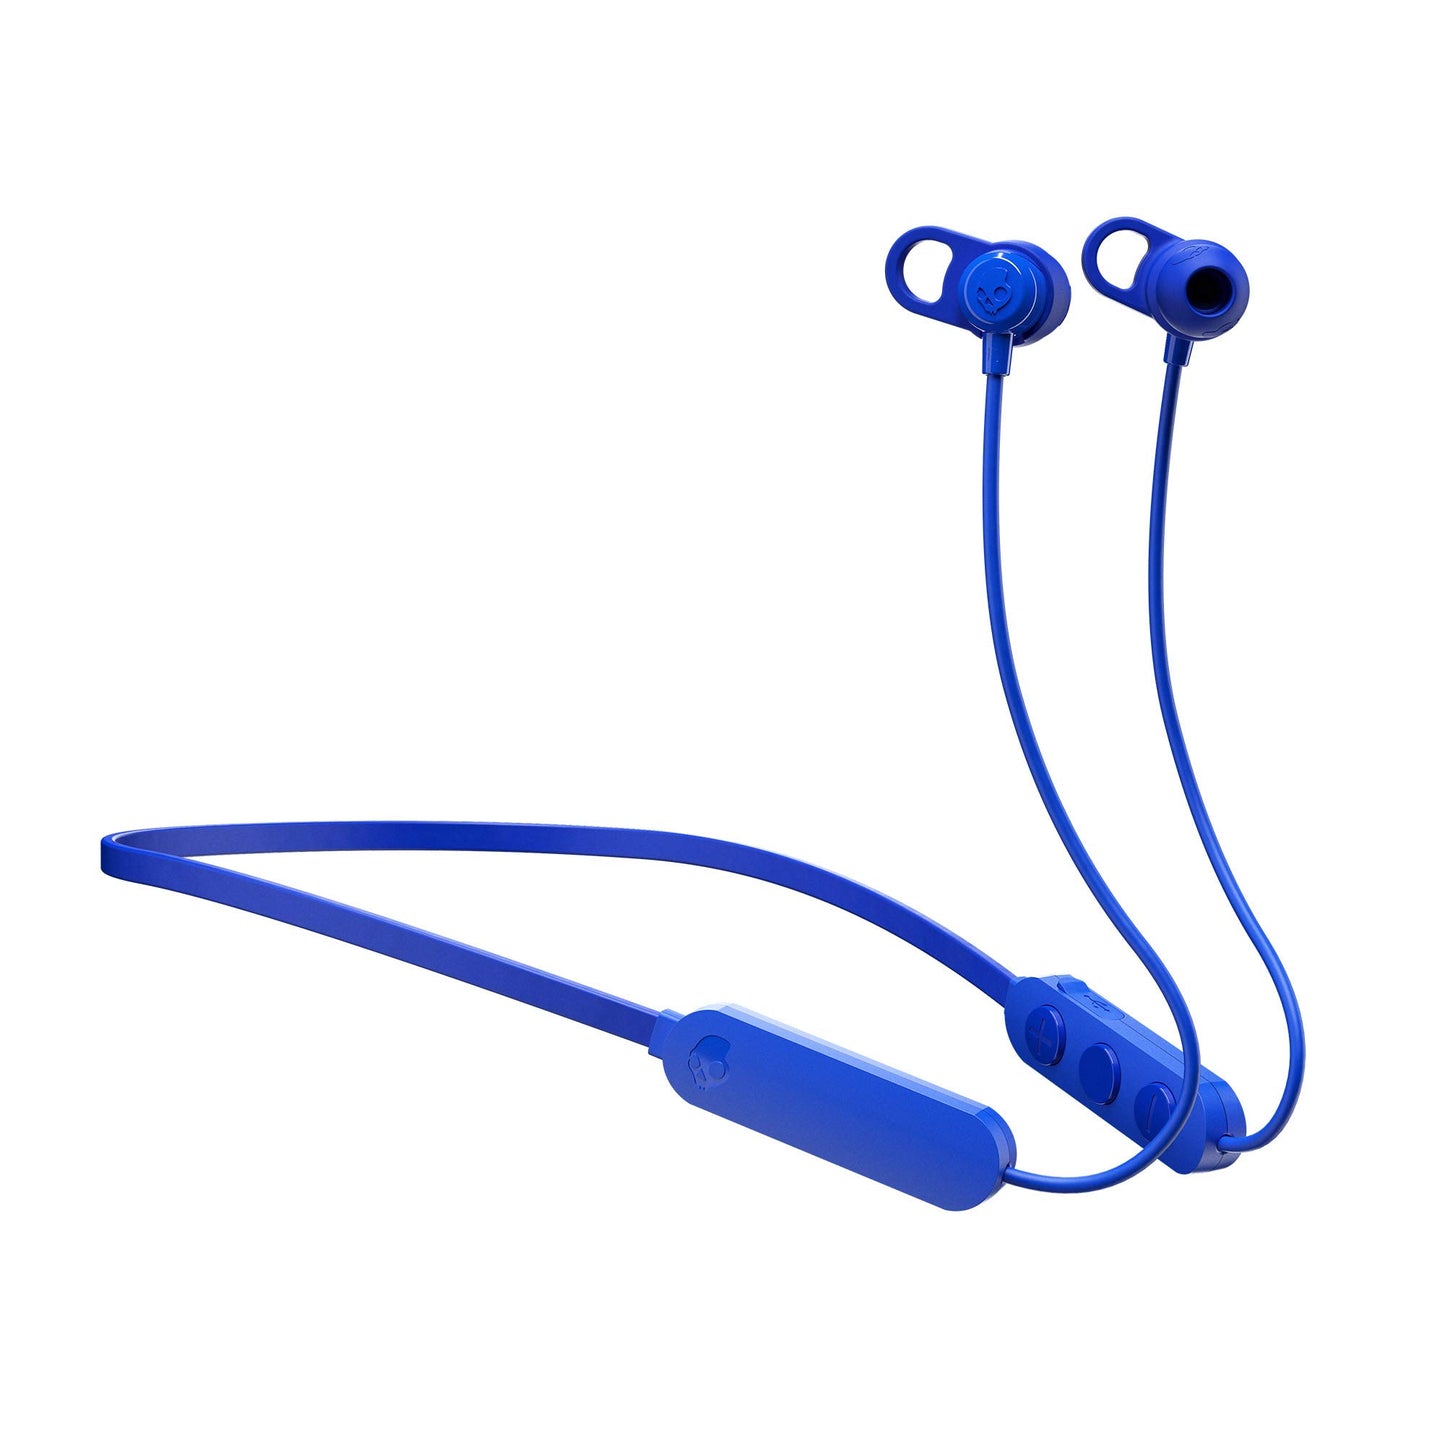 Bluetooth Wireless Earbuds - Blue (Case Of 12)